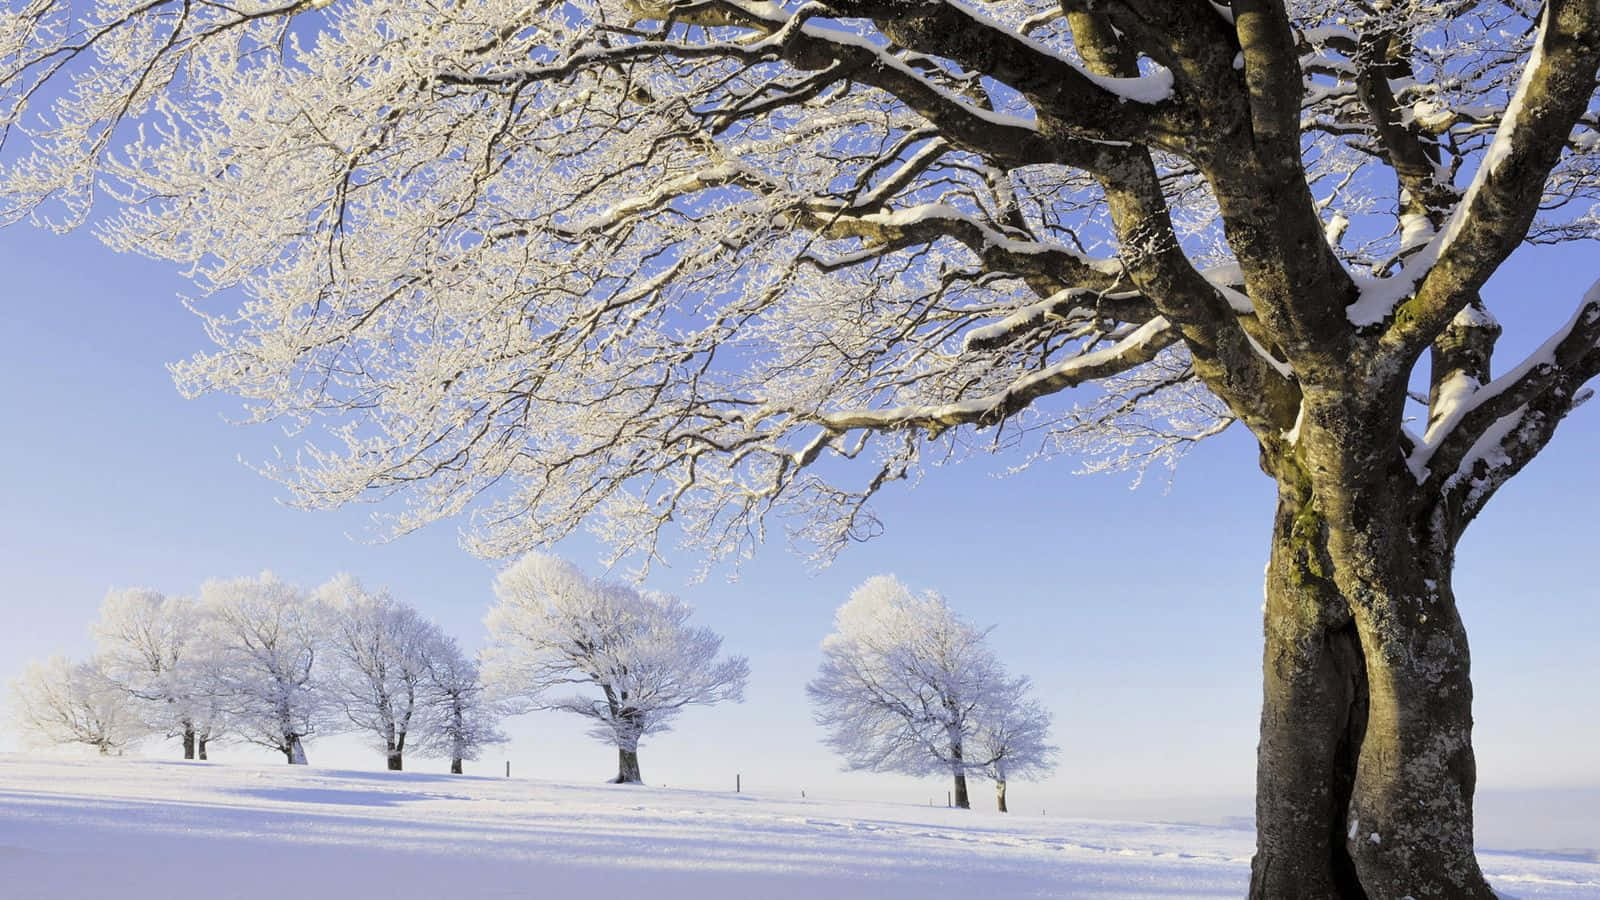 Snowy Winter Trees in the Sunlight Wallpaper